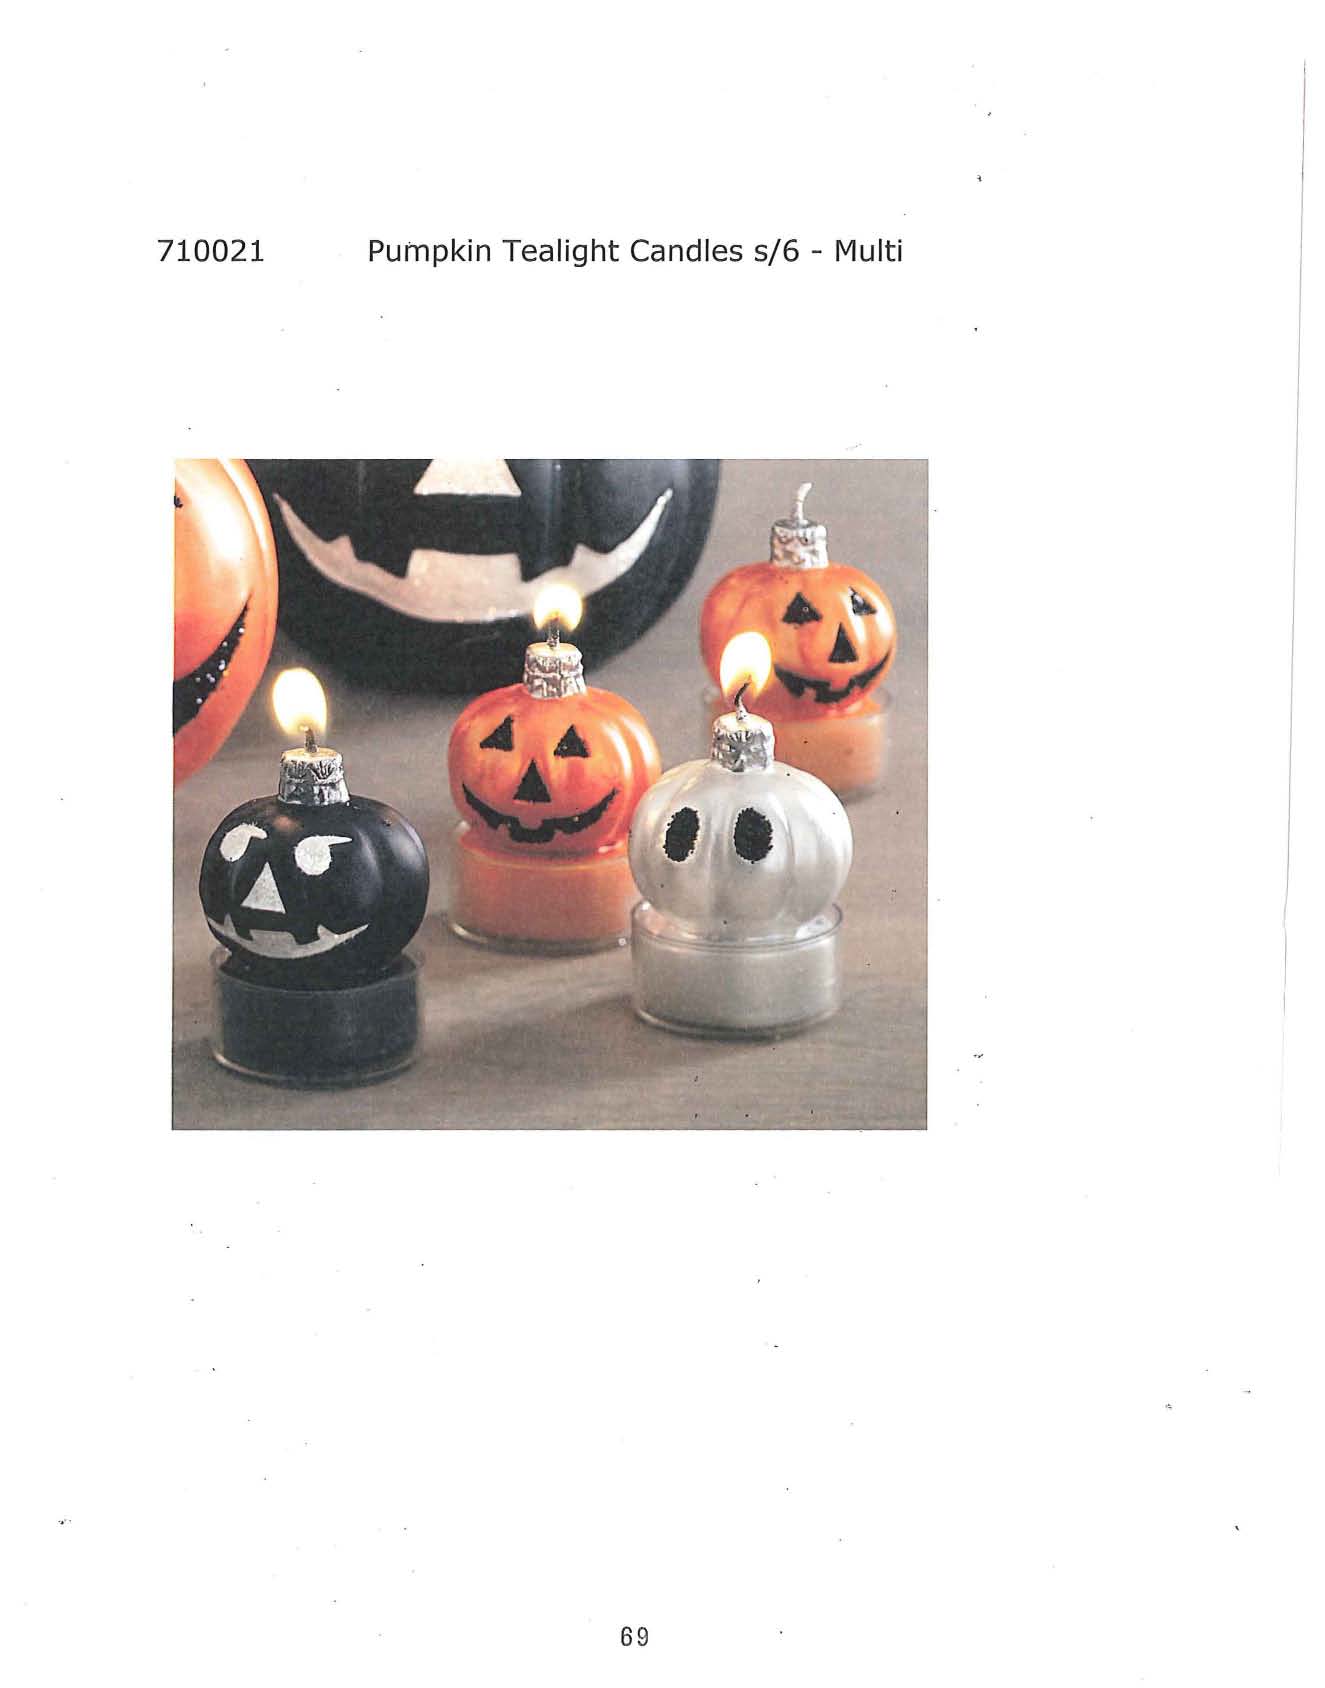 Pumpkin Tealight Candle s/6 - Multi